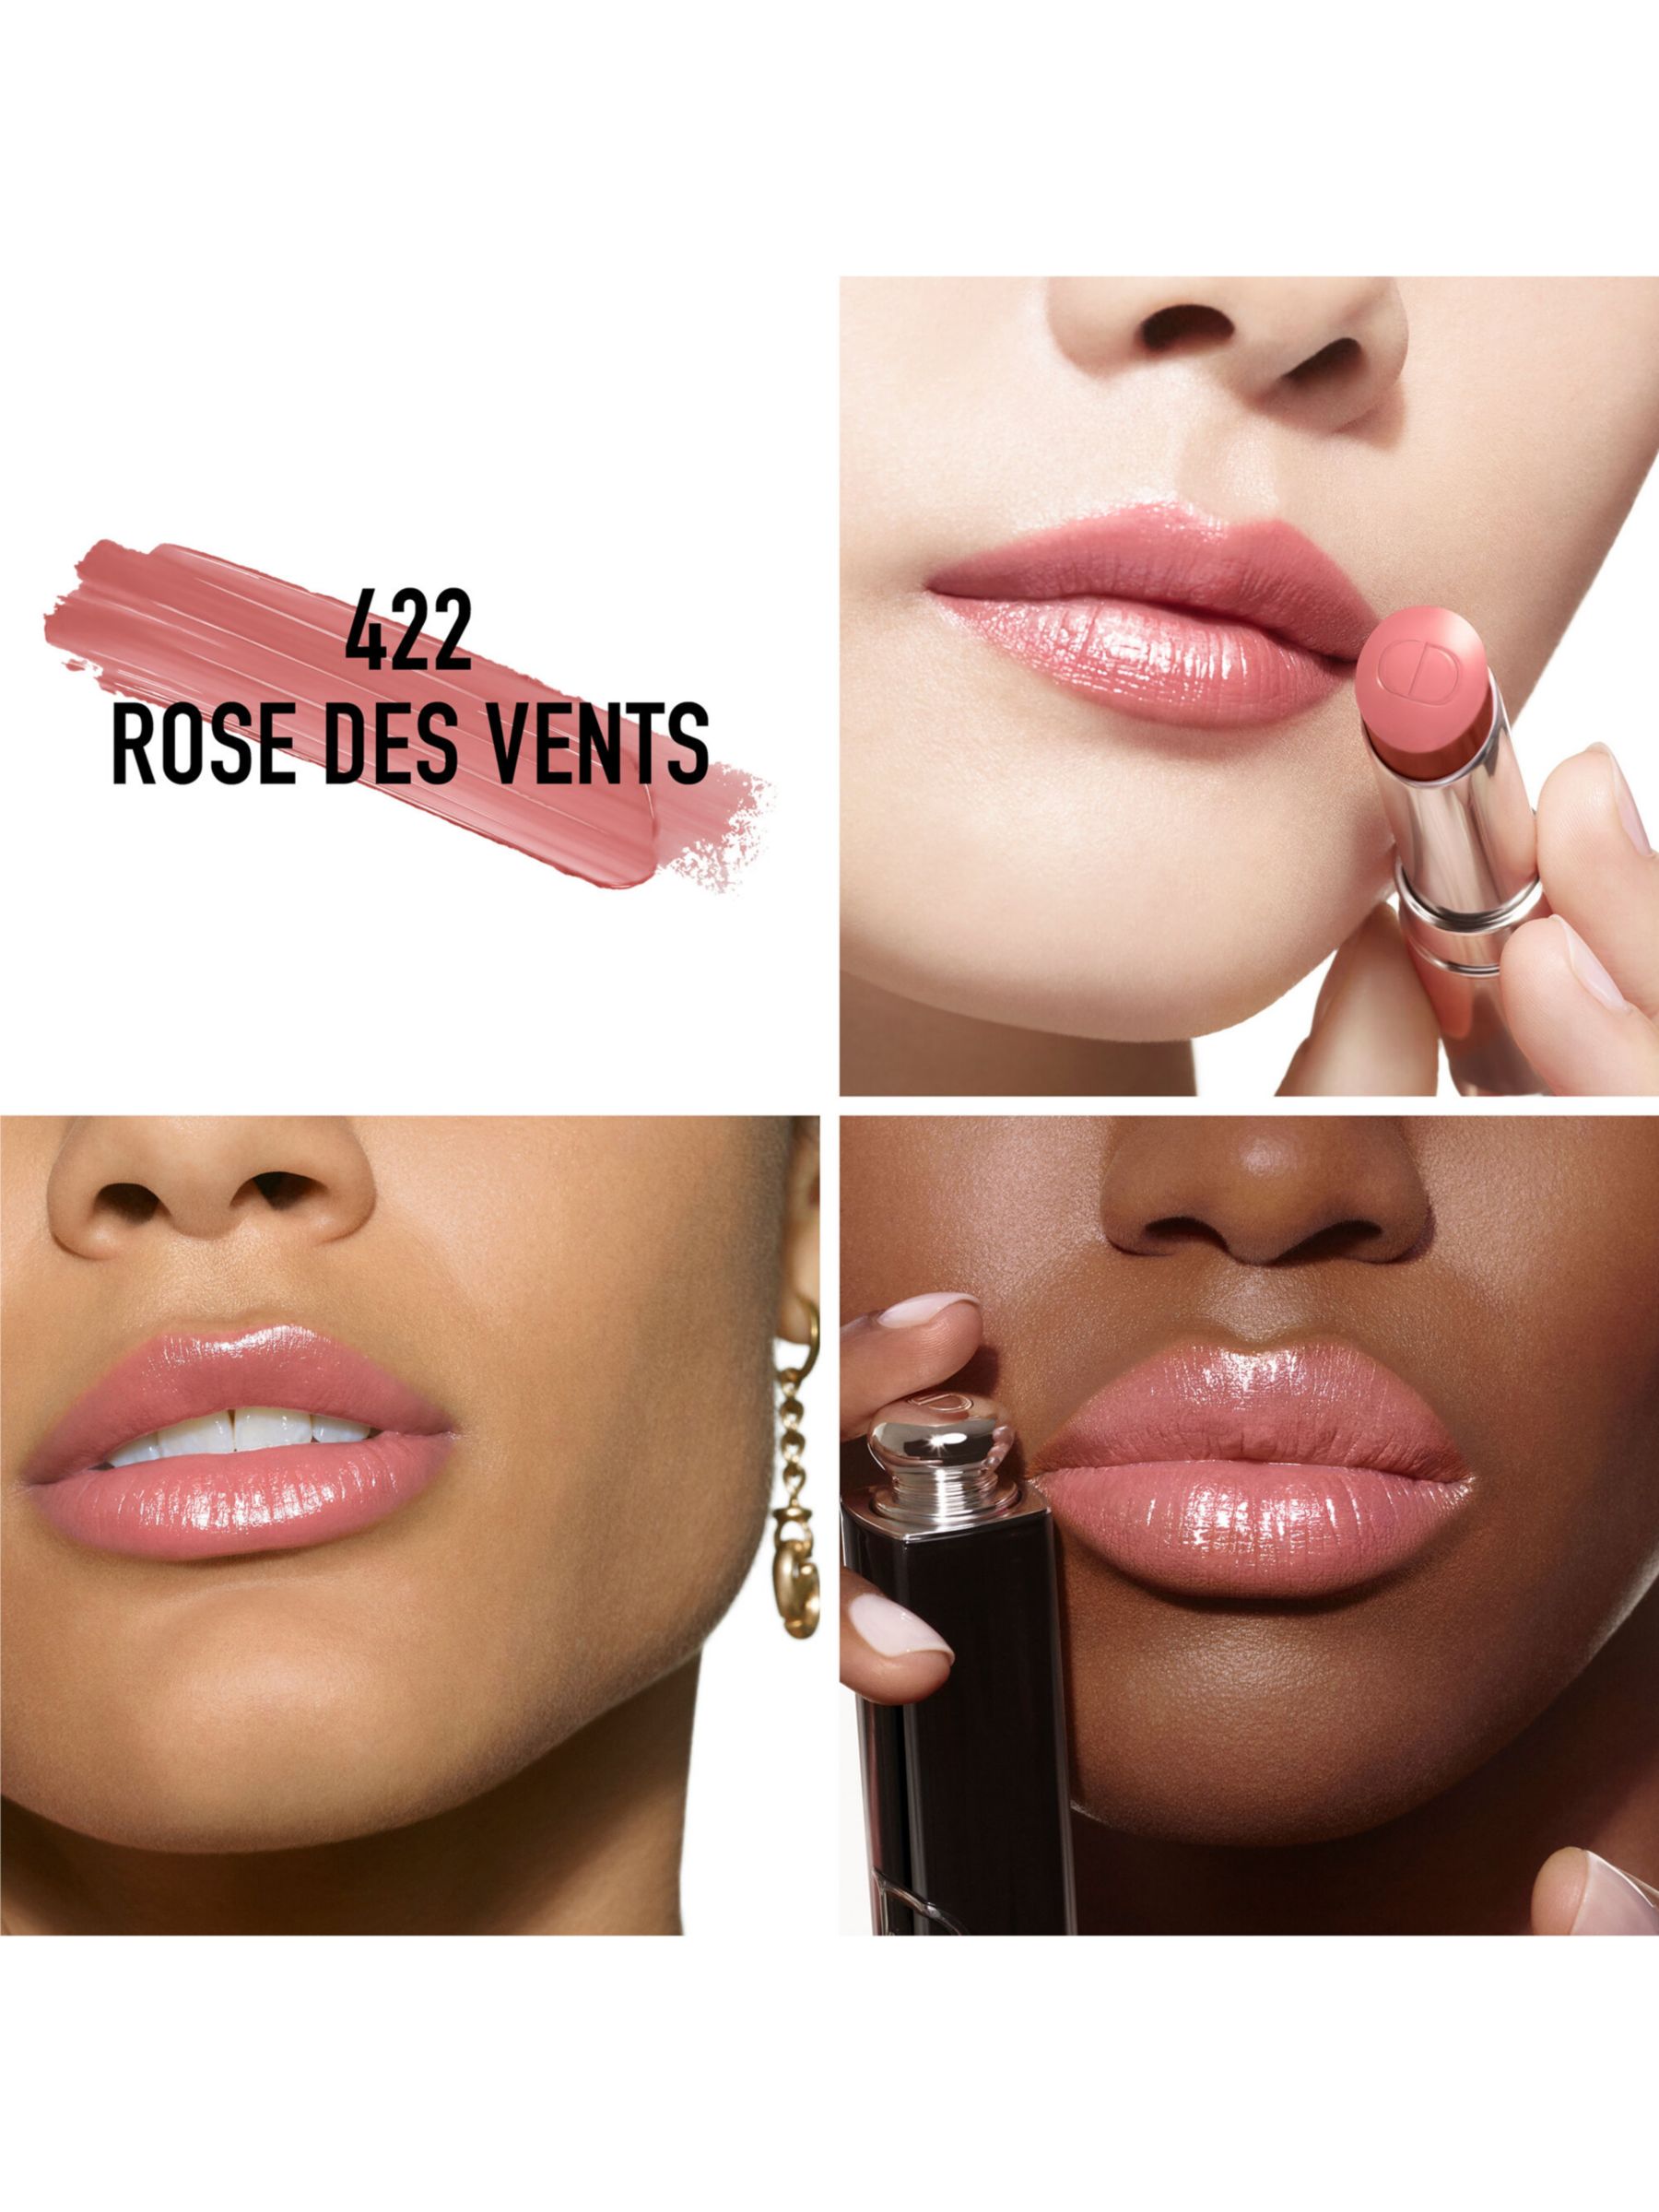 DIOR Addict Shine Refillable Lipstick, 422 Rose des Vents at John